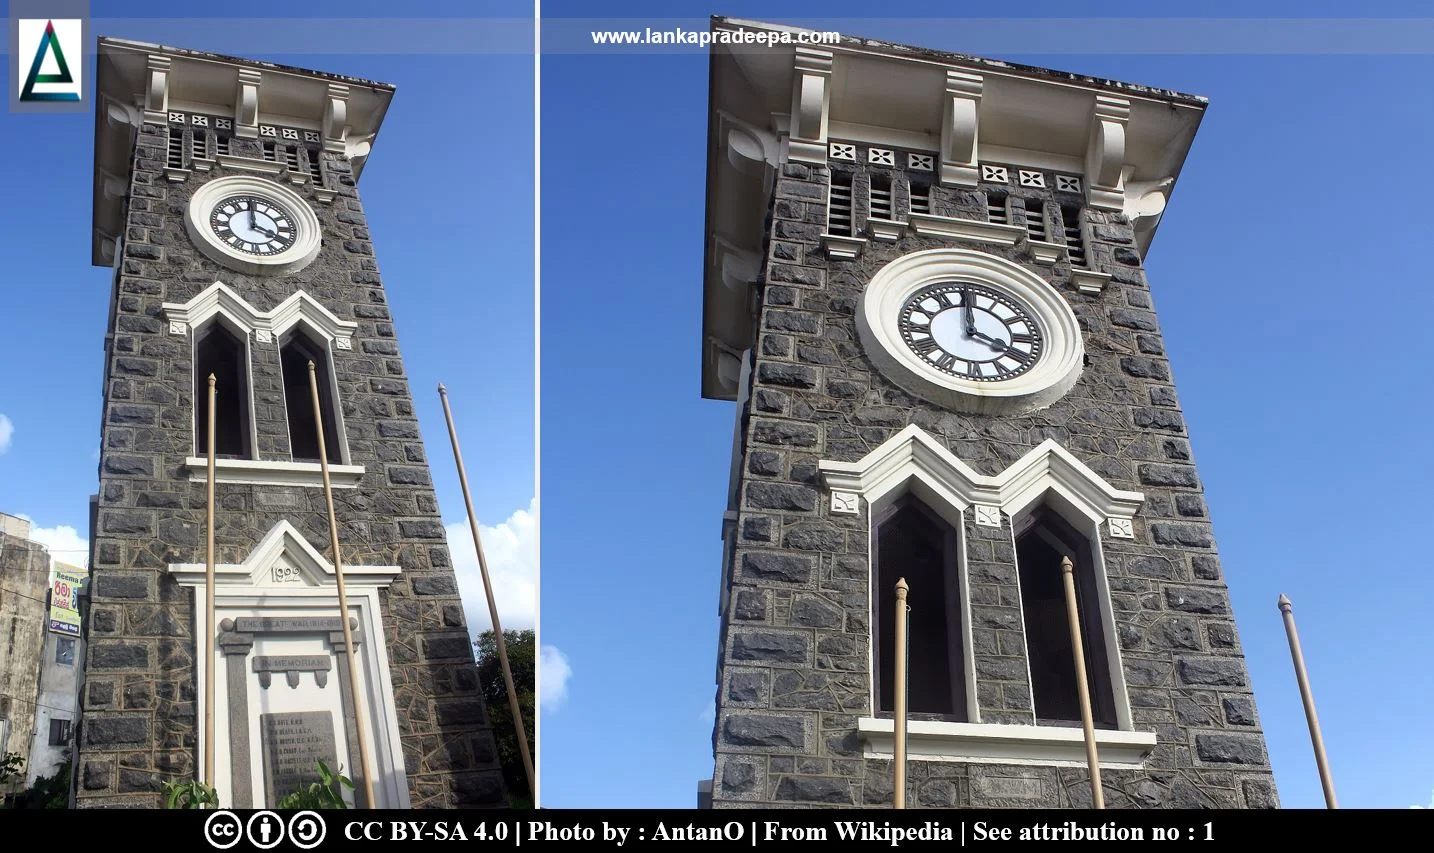 Kurunegala Clock Tower